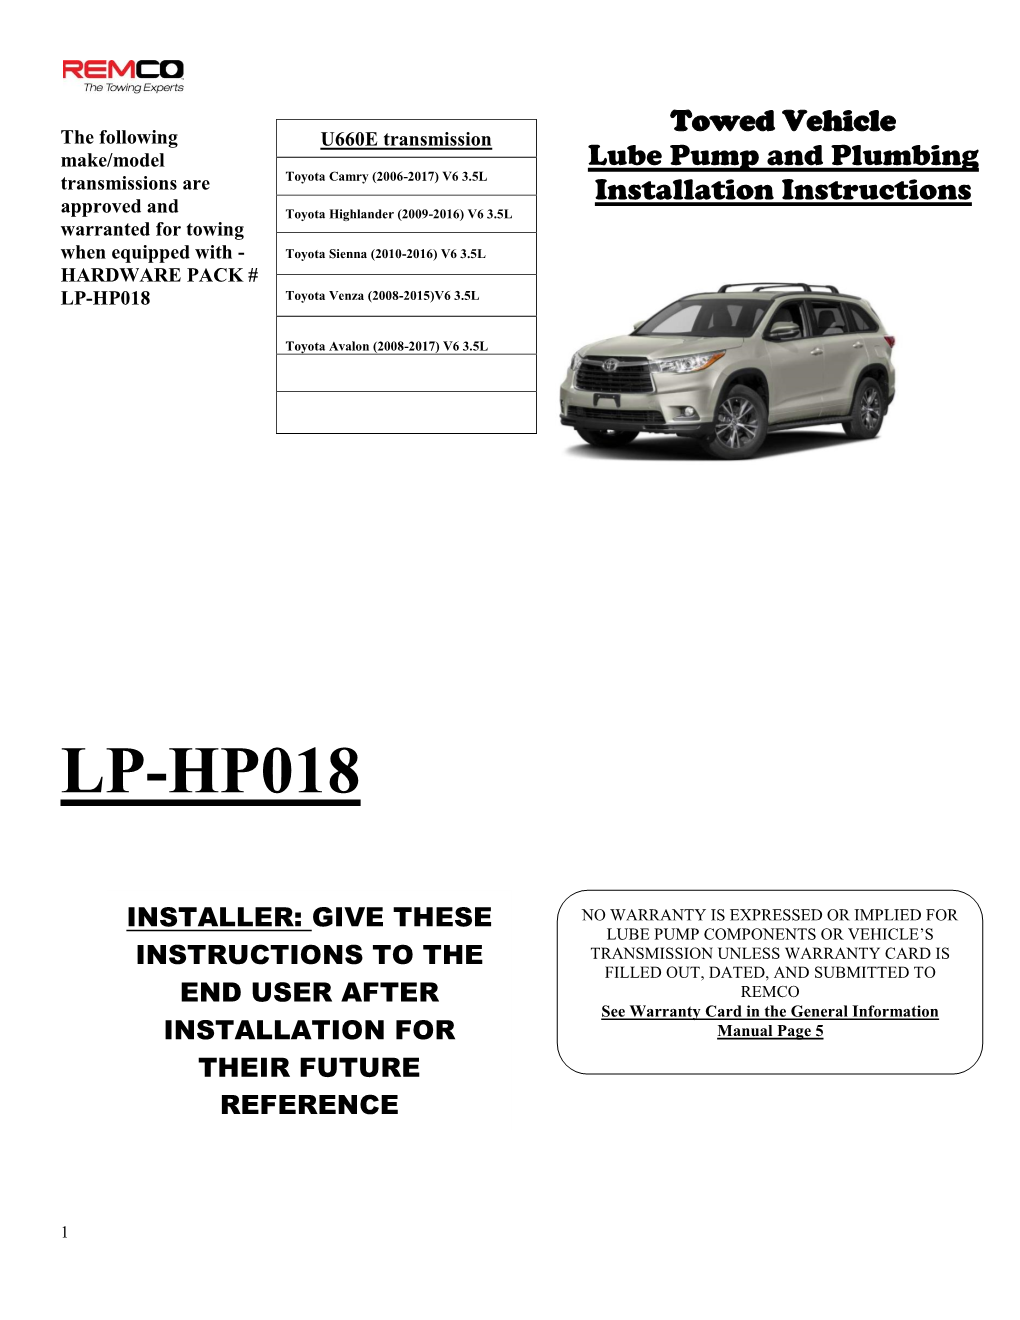 LP-HP018 Toyota Venza (2008-2015)V6 3.5L